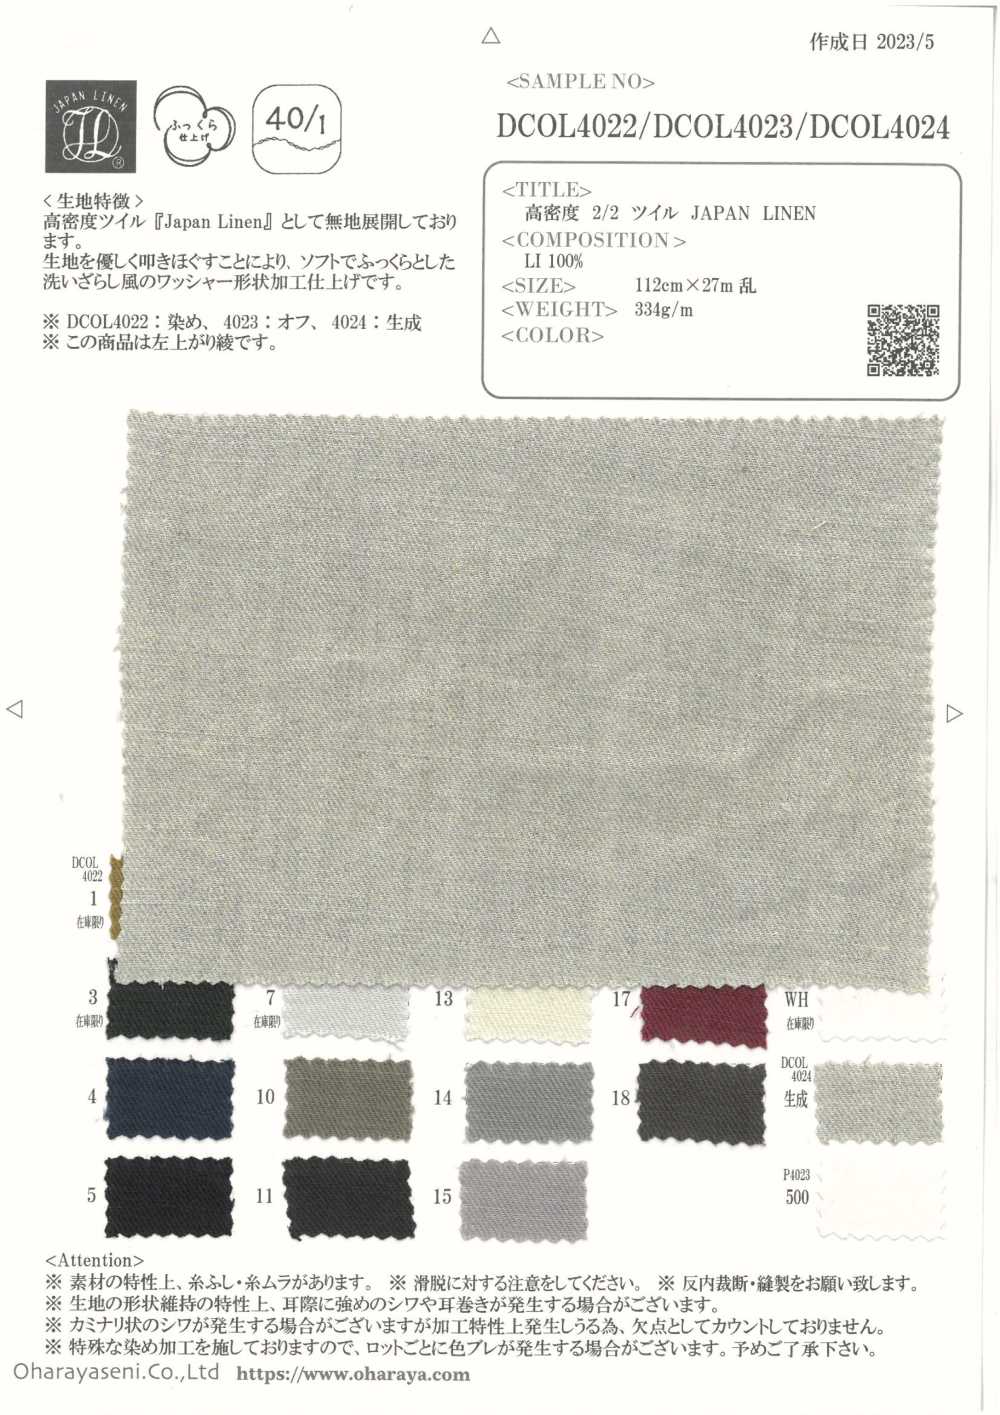 DCOL4022 高密度 2/2 ツイル JAPAN LINEN[生地] 小原屋繊維